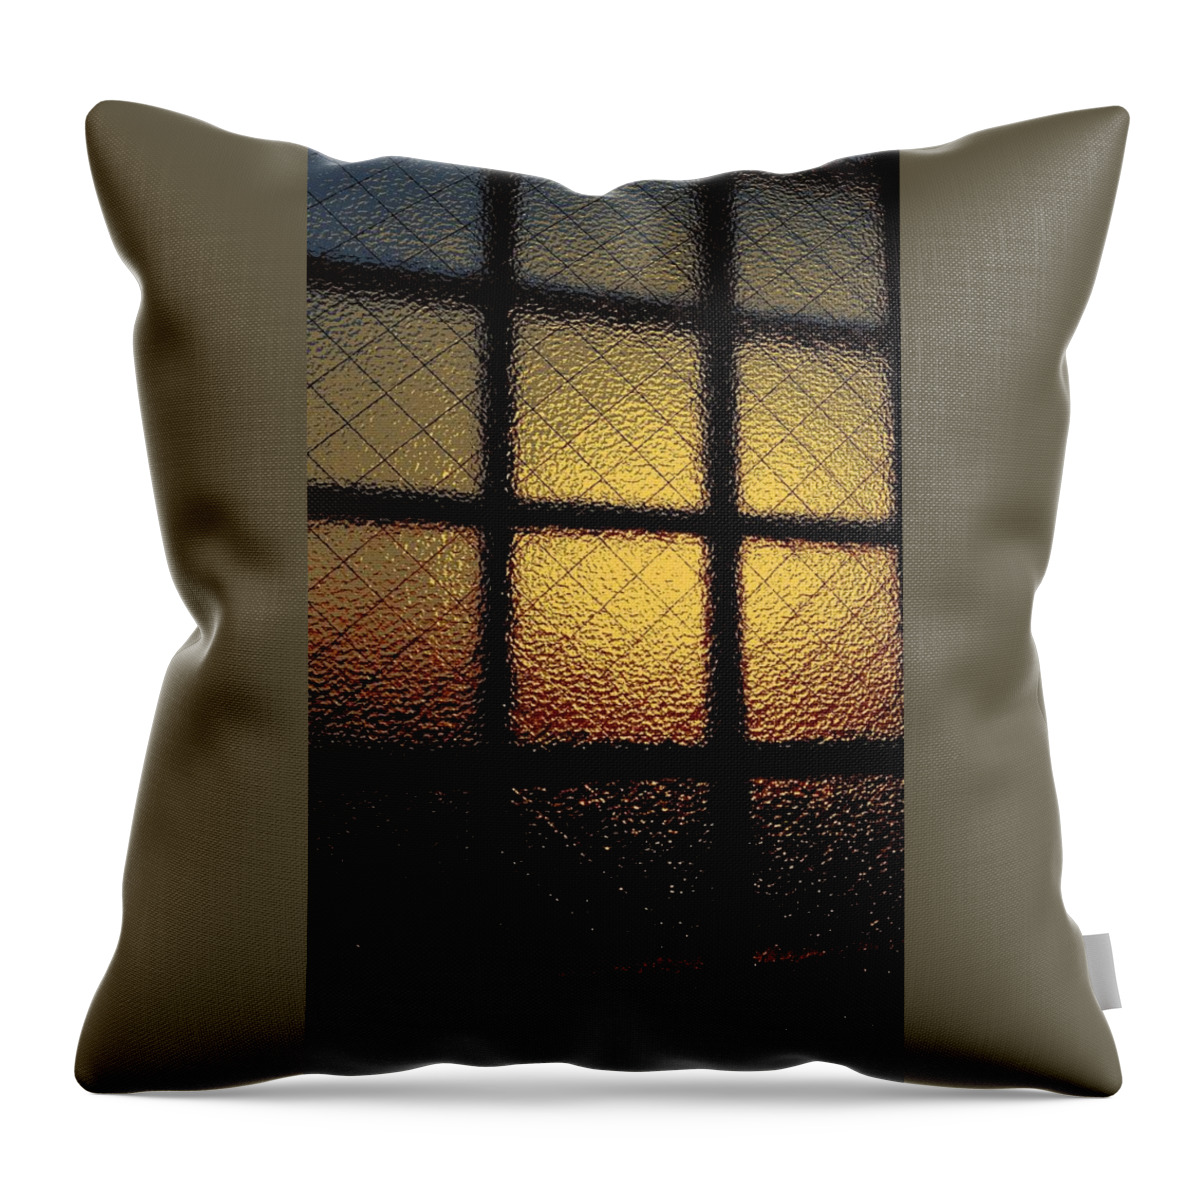 Sunset Throw Pillow featuring the digital art Sunset orange by Kumiko Izumi